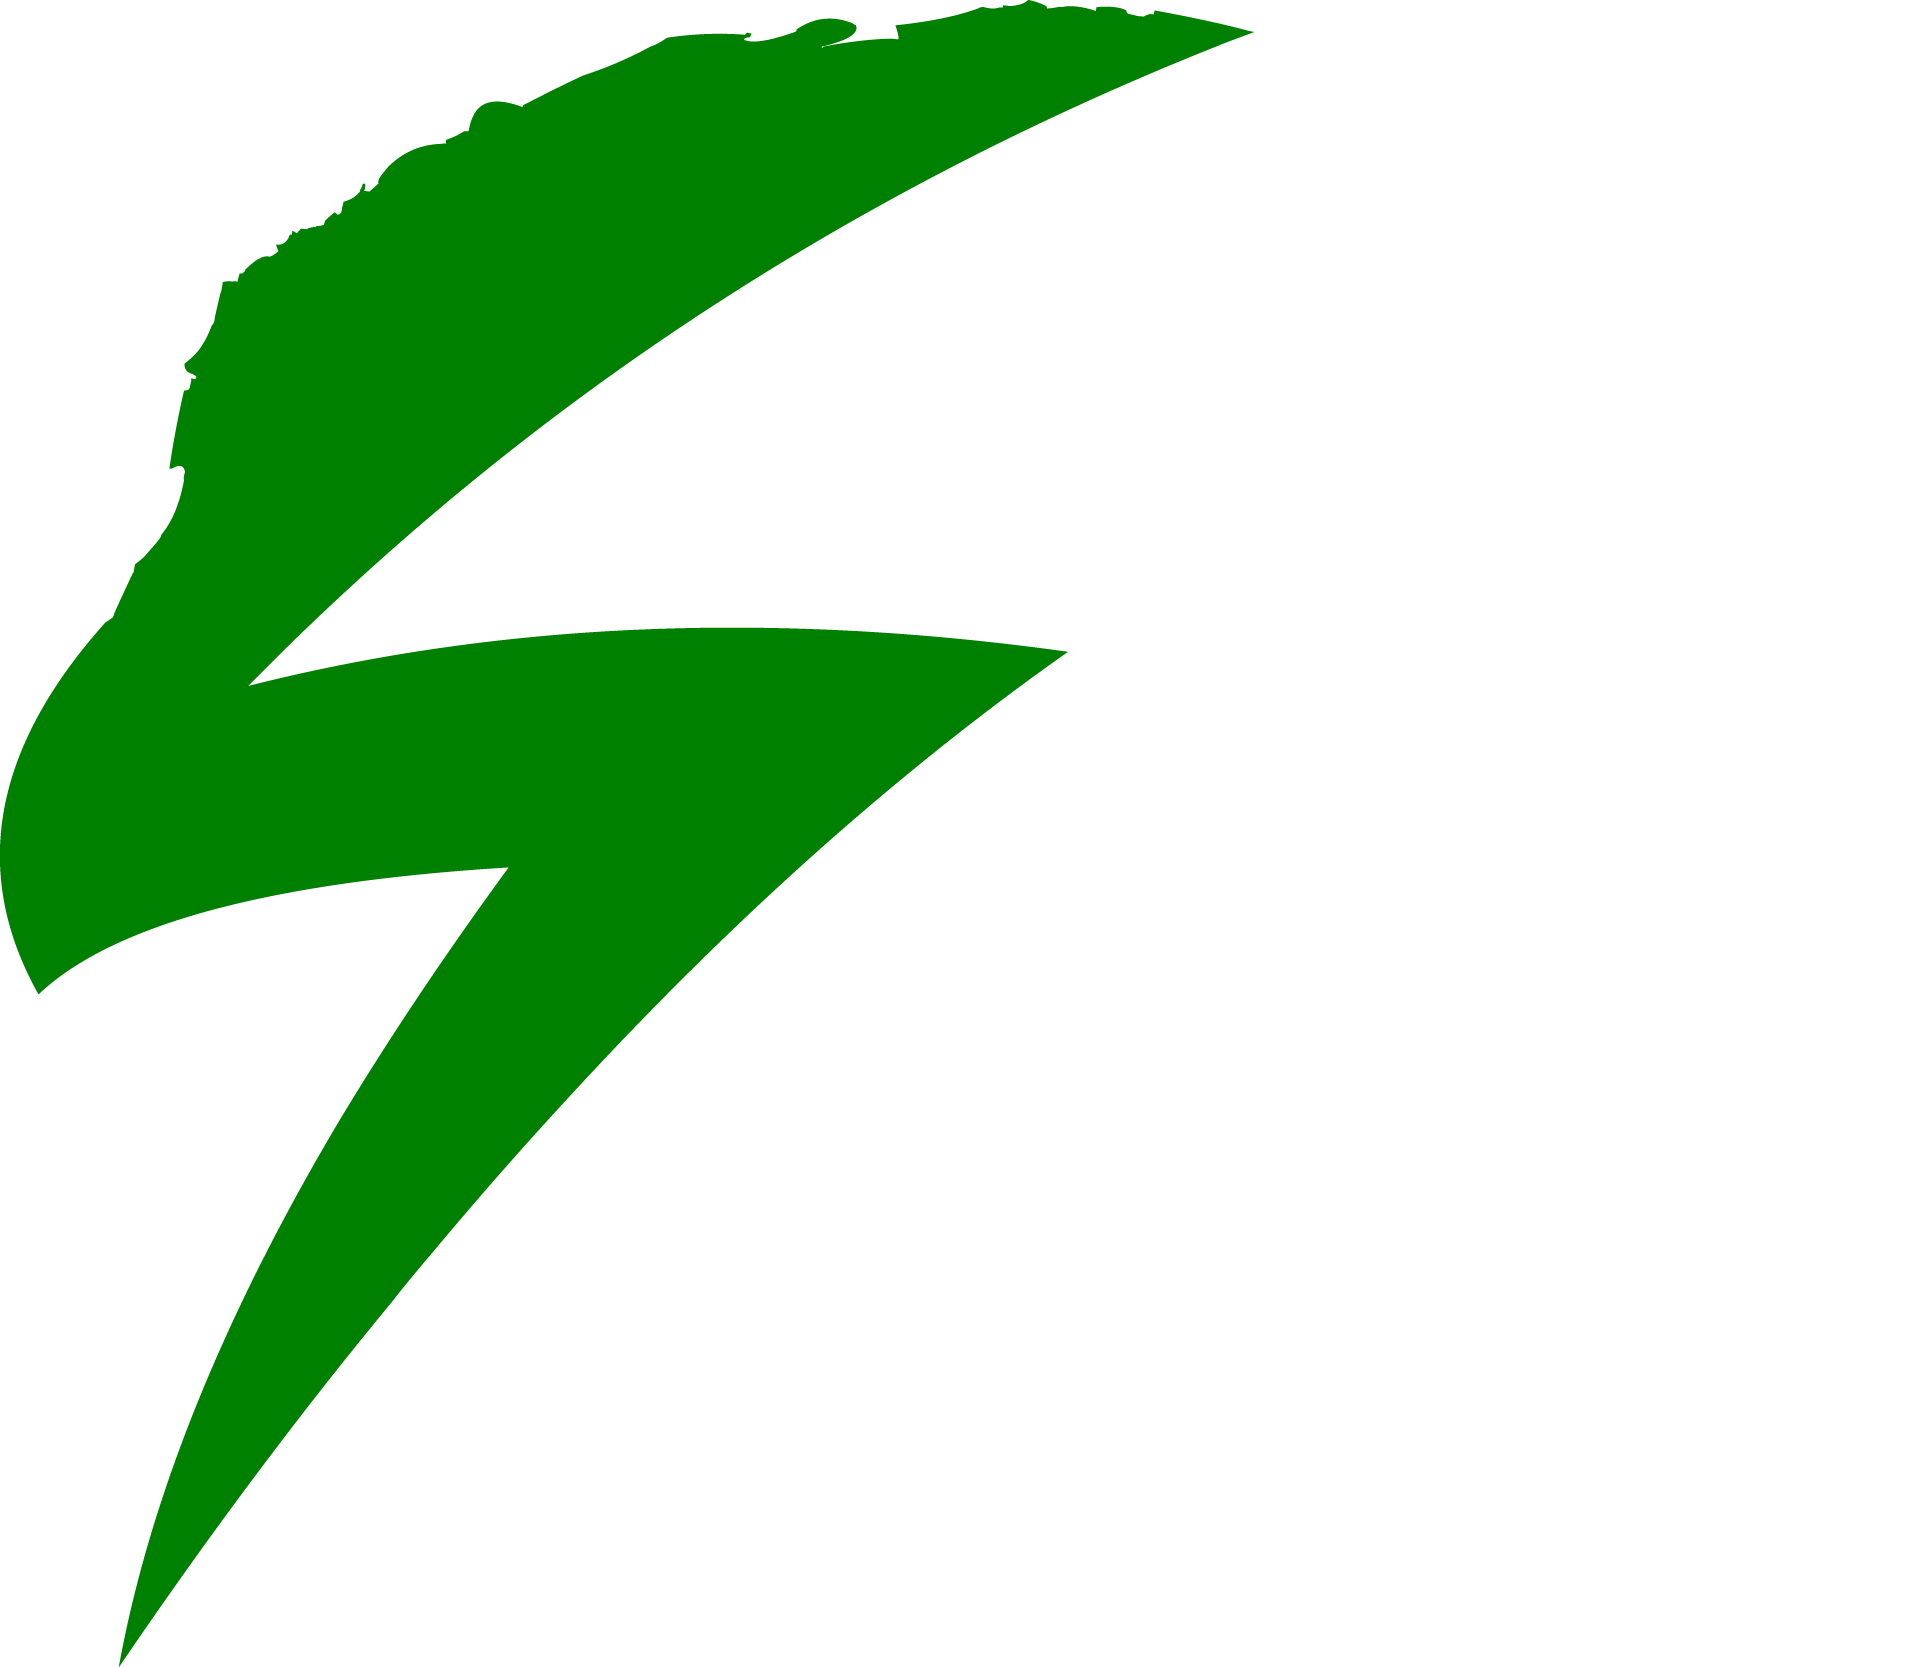 Servhawk logo